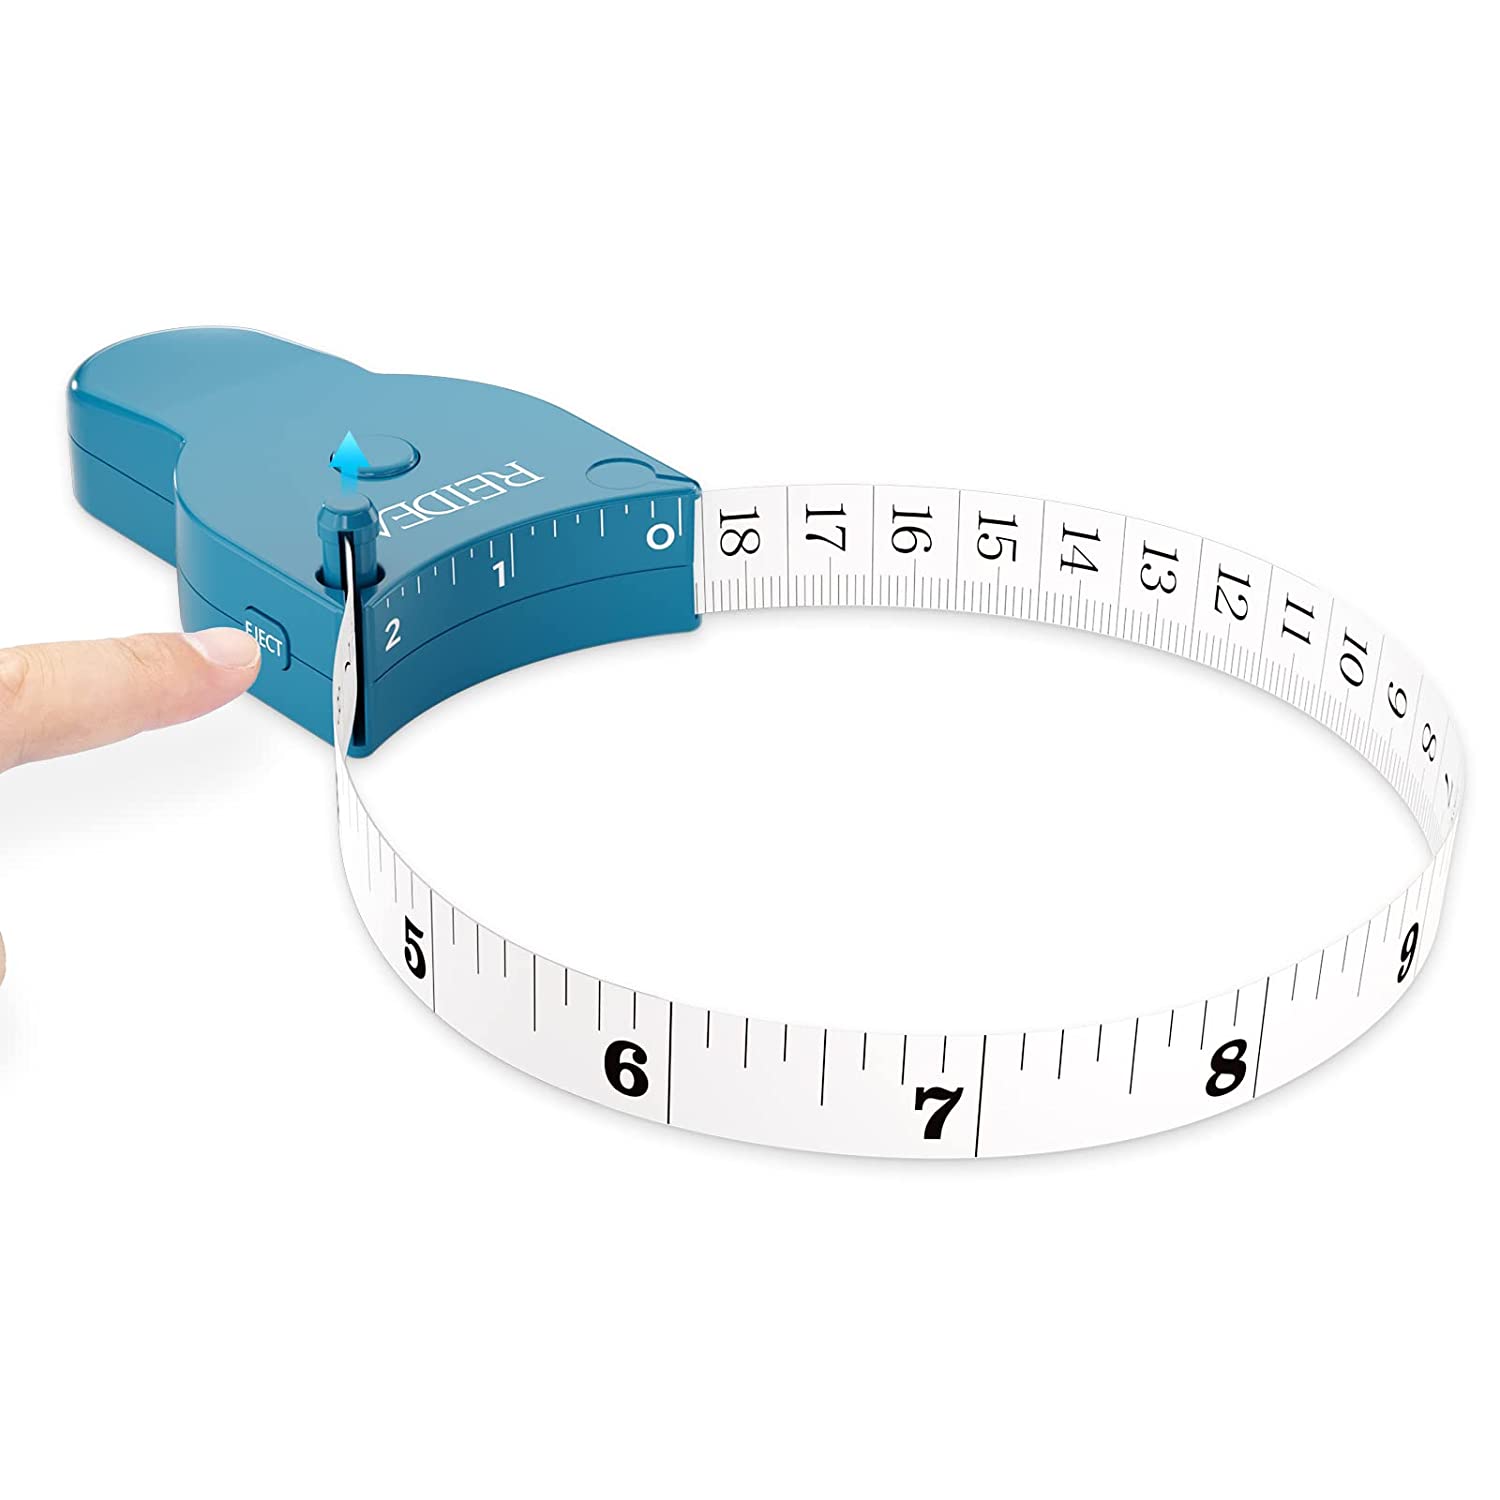 Body Tape Measure